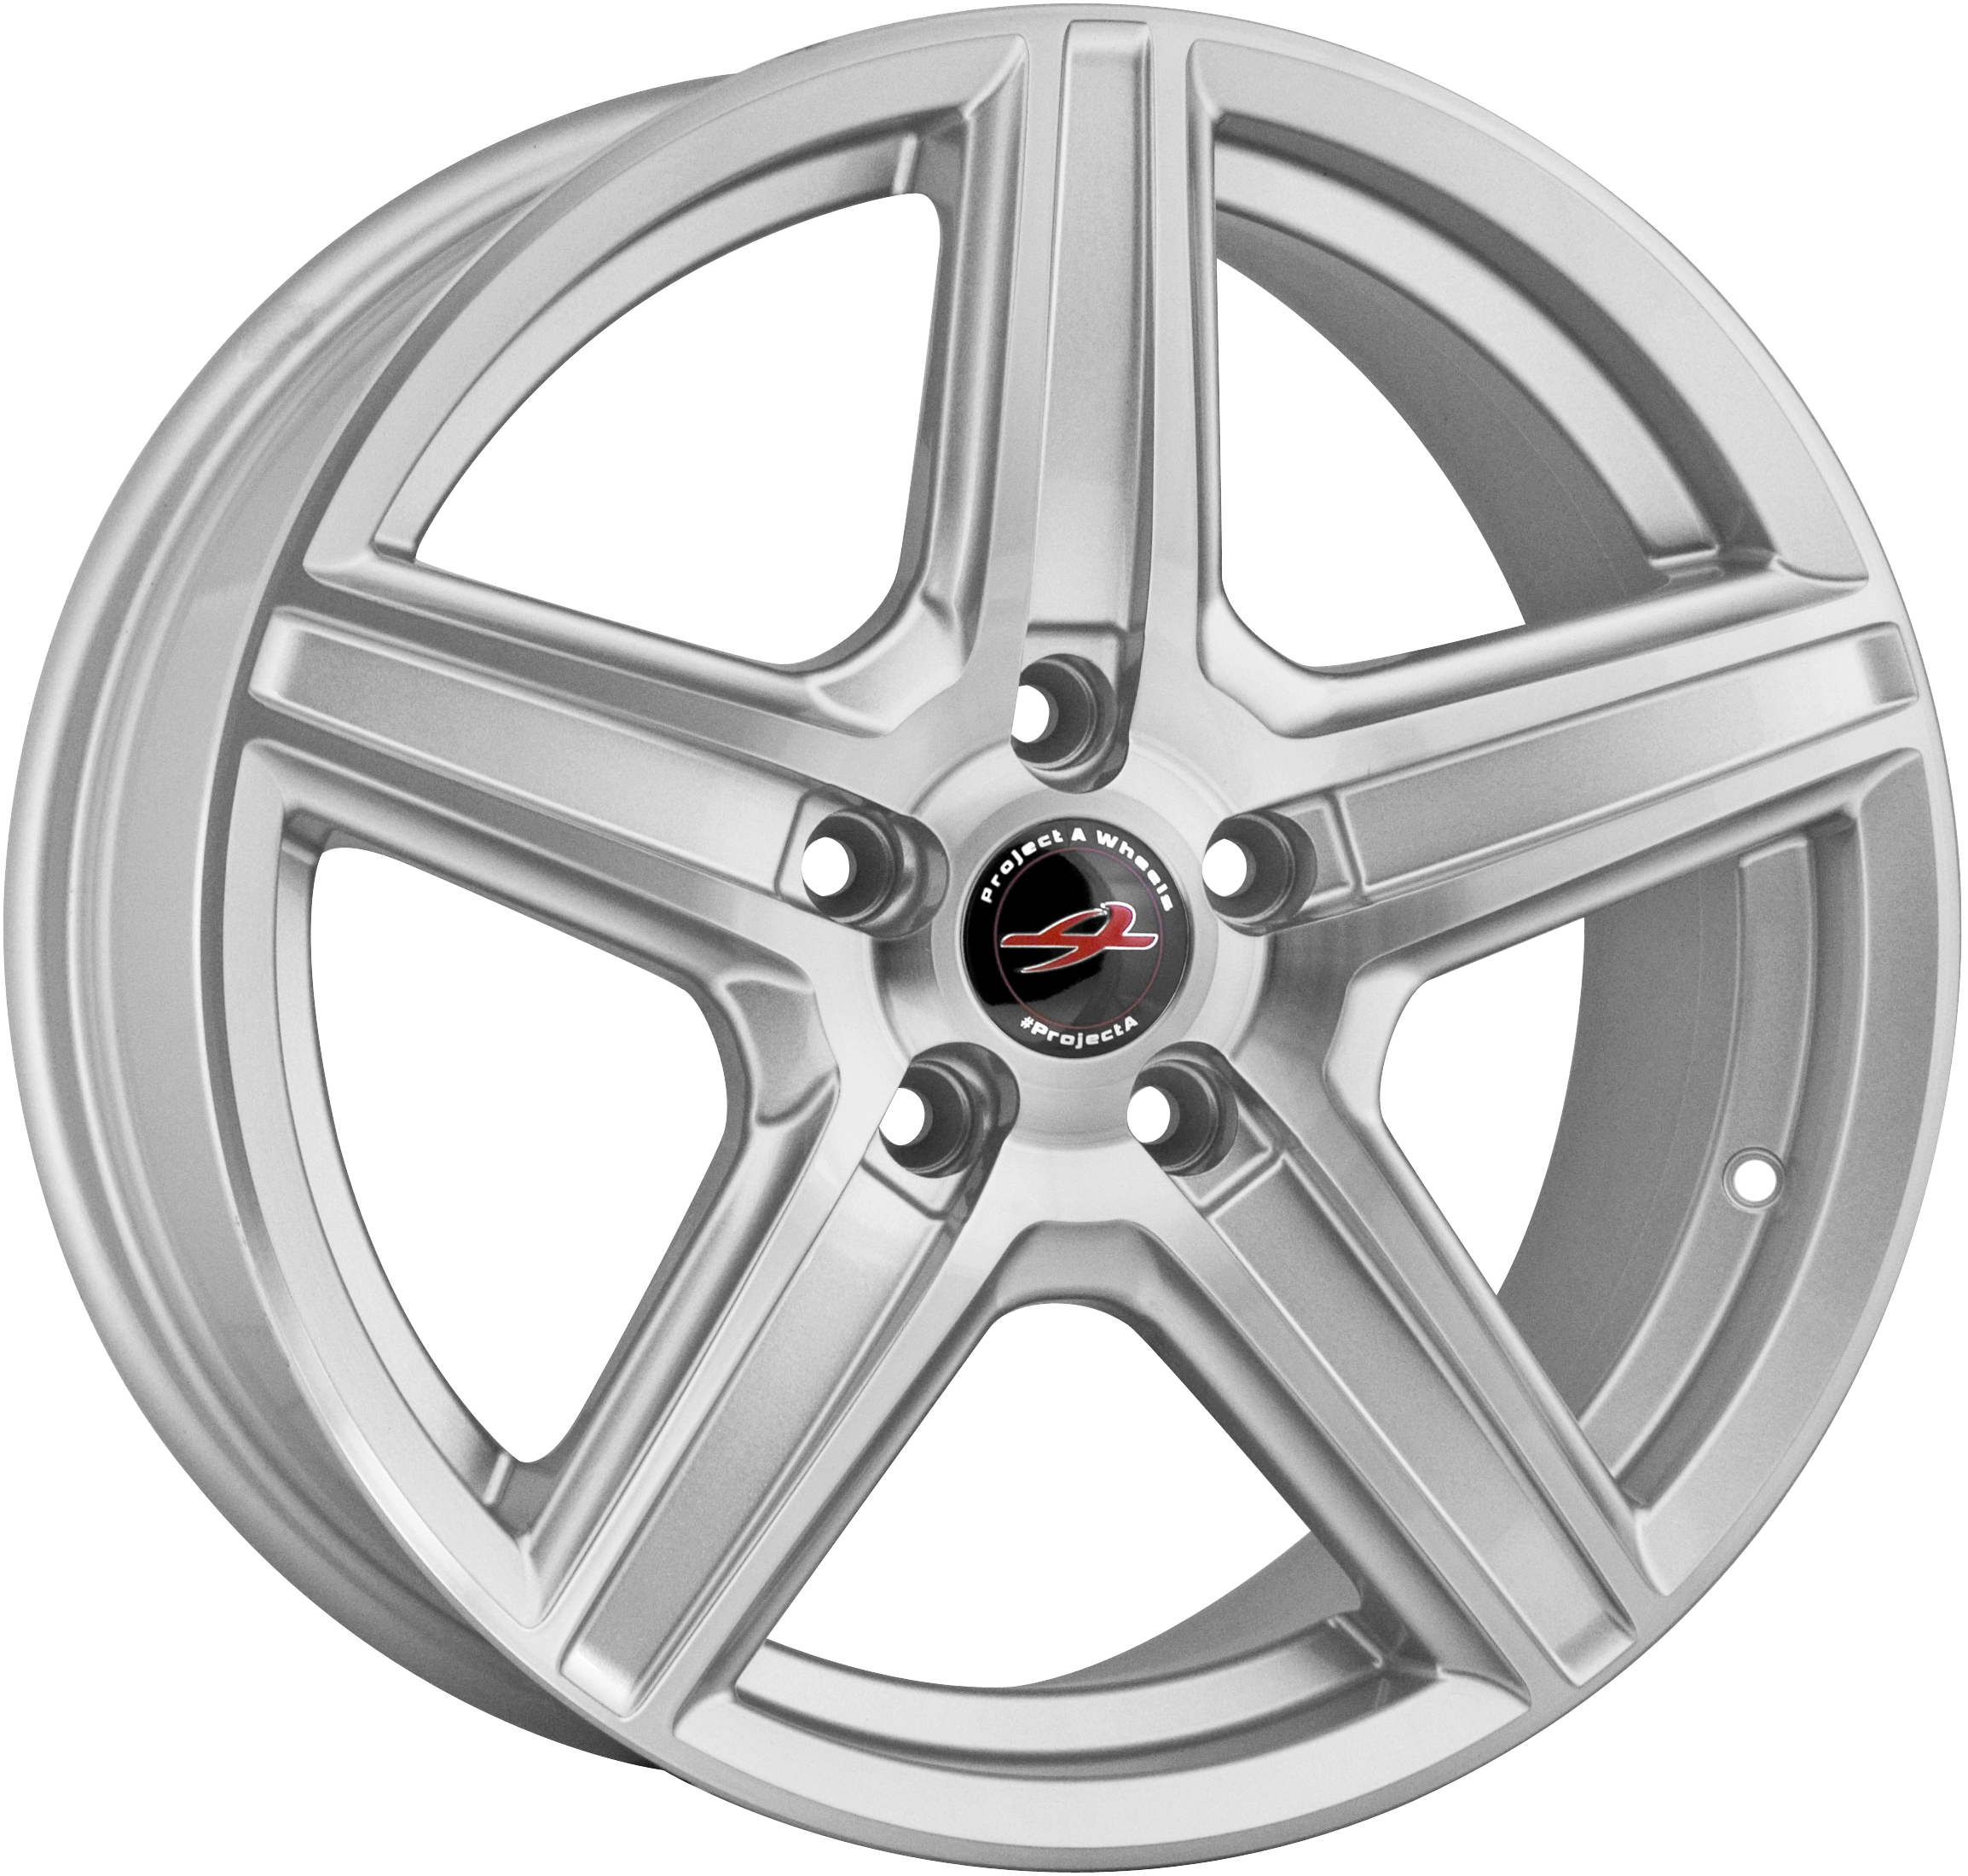 Clearance Sale Project-A Zeta5 Alloy Wheels